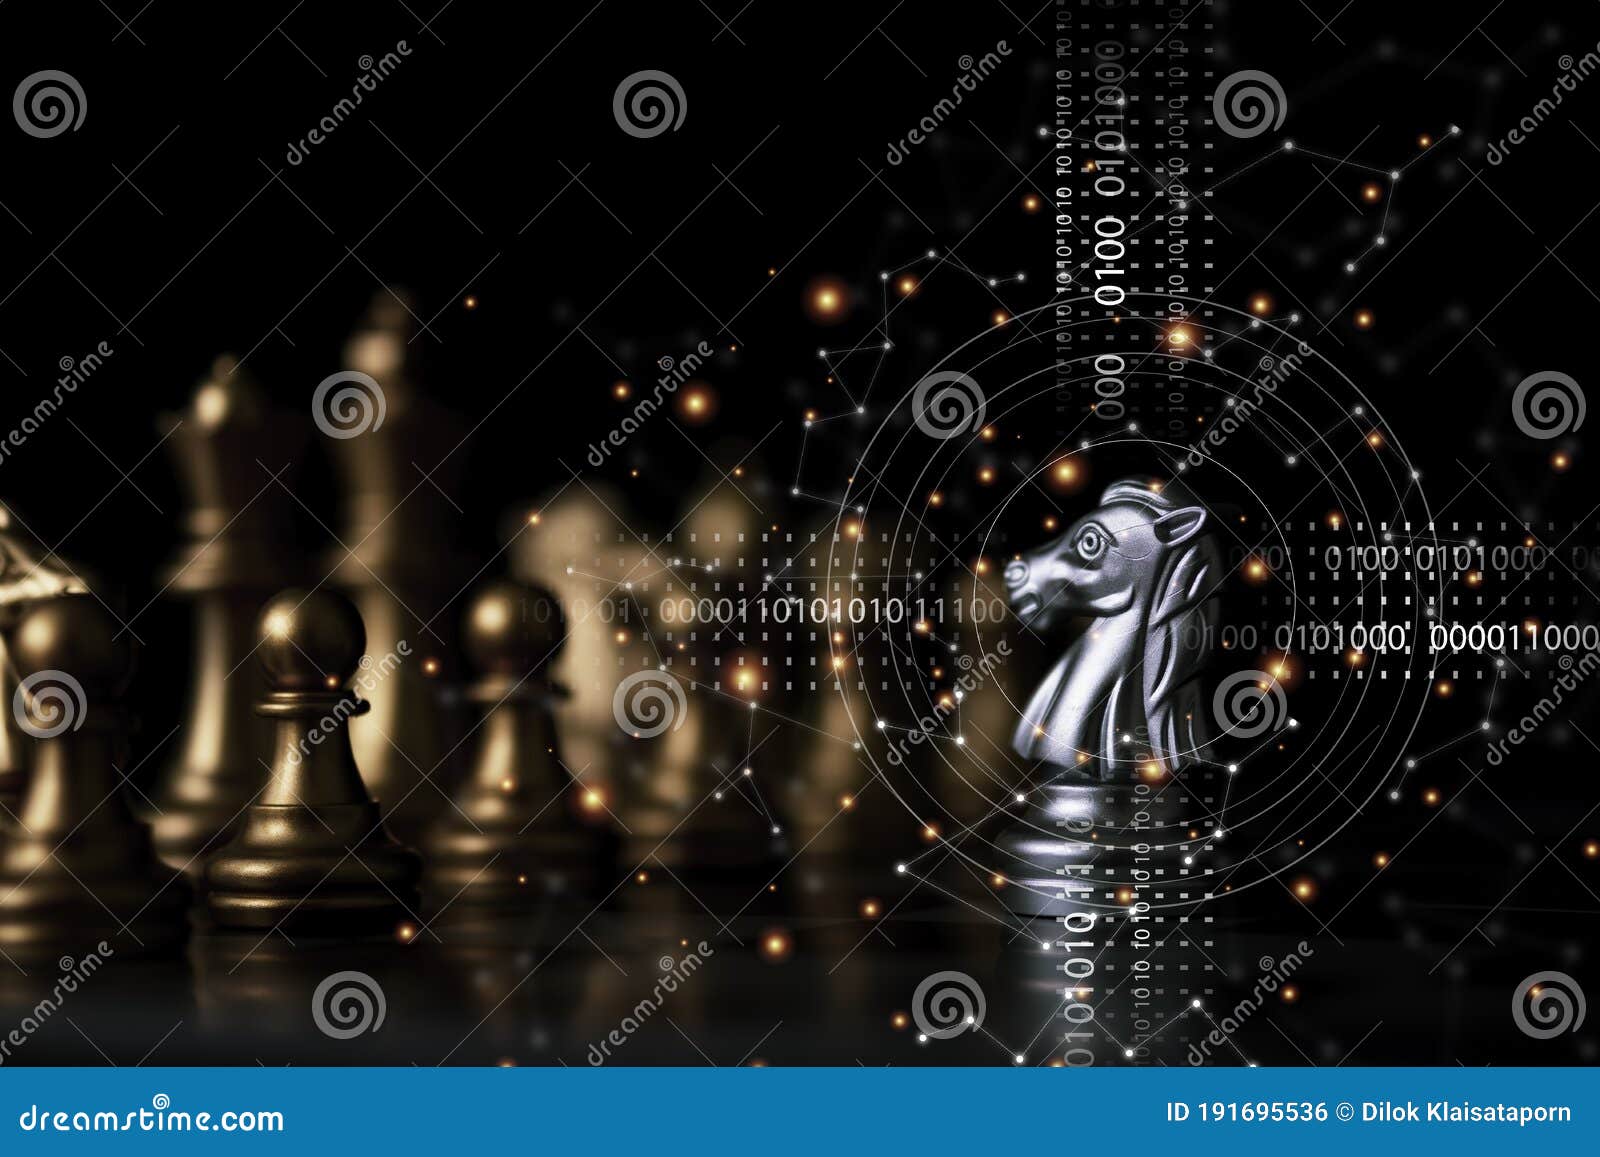 A batalha de peças de xadrez de cavalos, xadrez de cavalos de prata em um  tabuleiro de xadrez